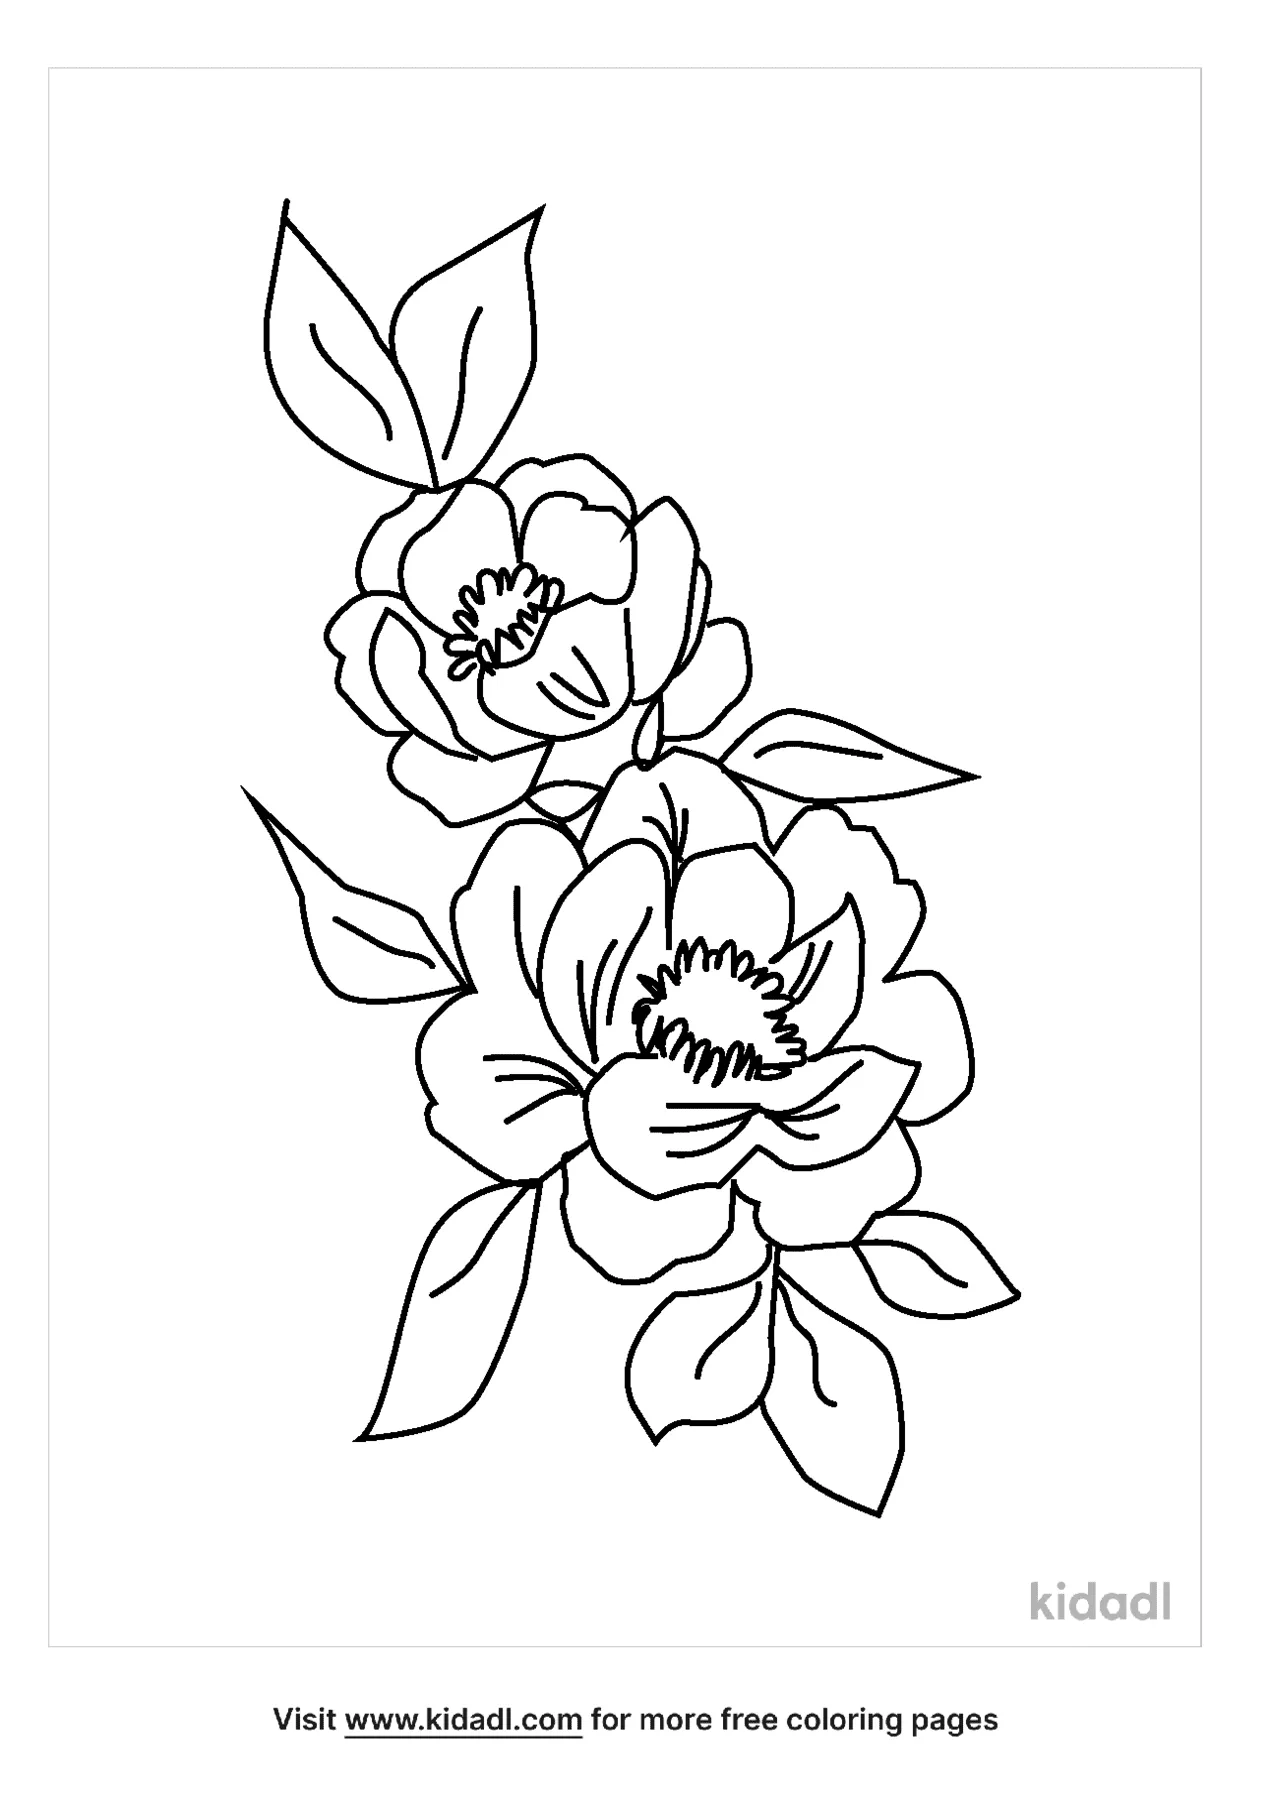 Free charisma floribunda rose coloring page coloring page printables